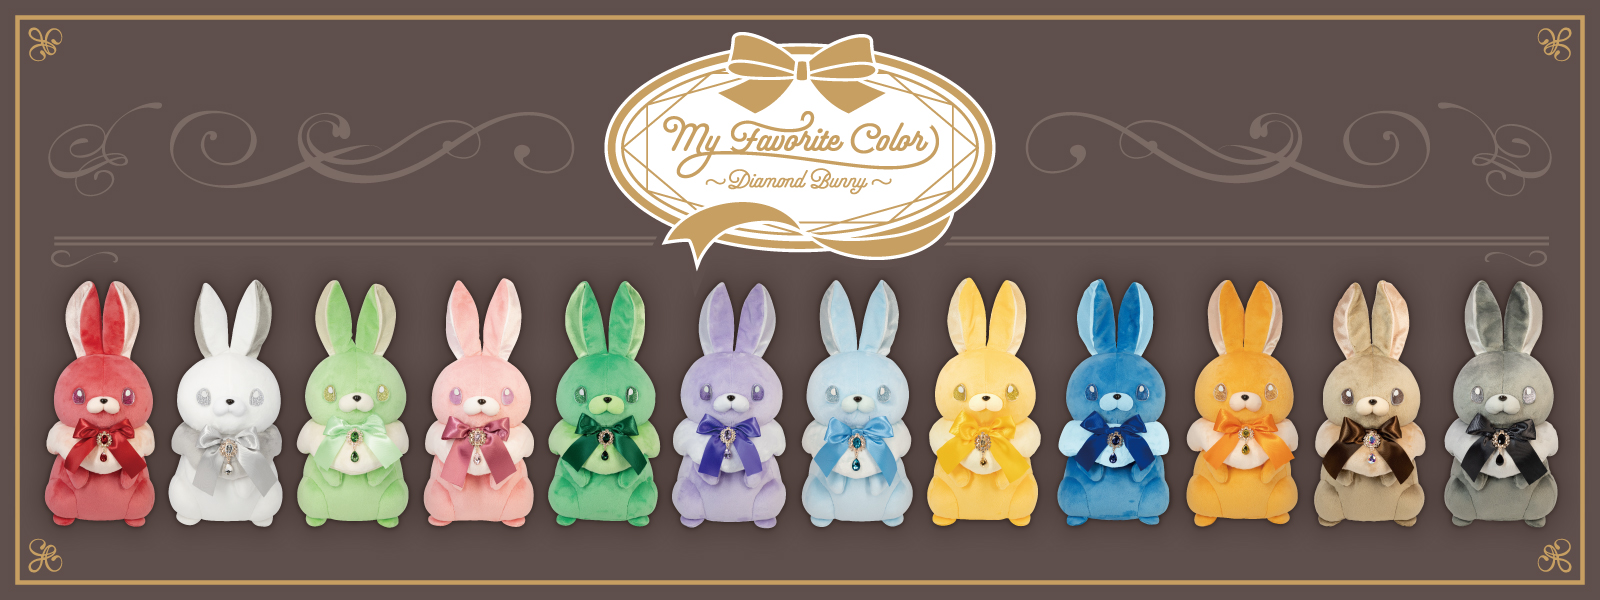 My Favorite Color～Diamond Bunny～